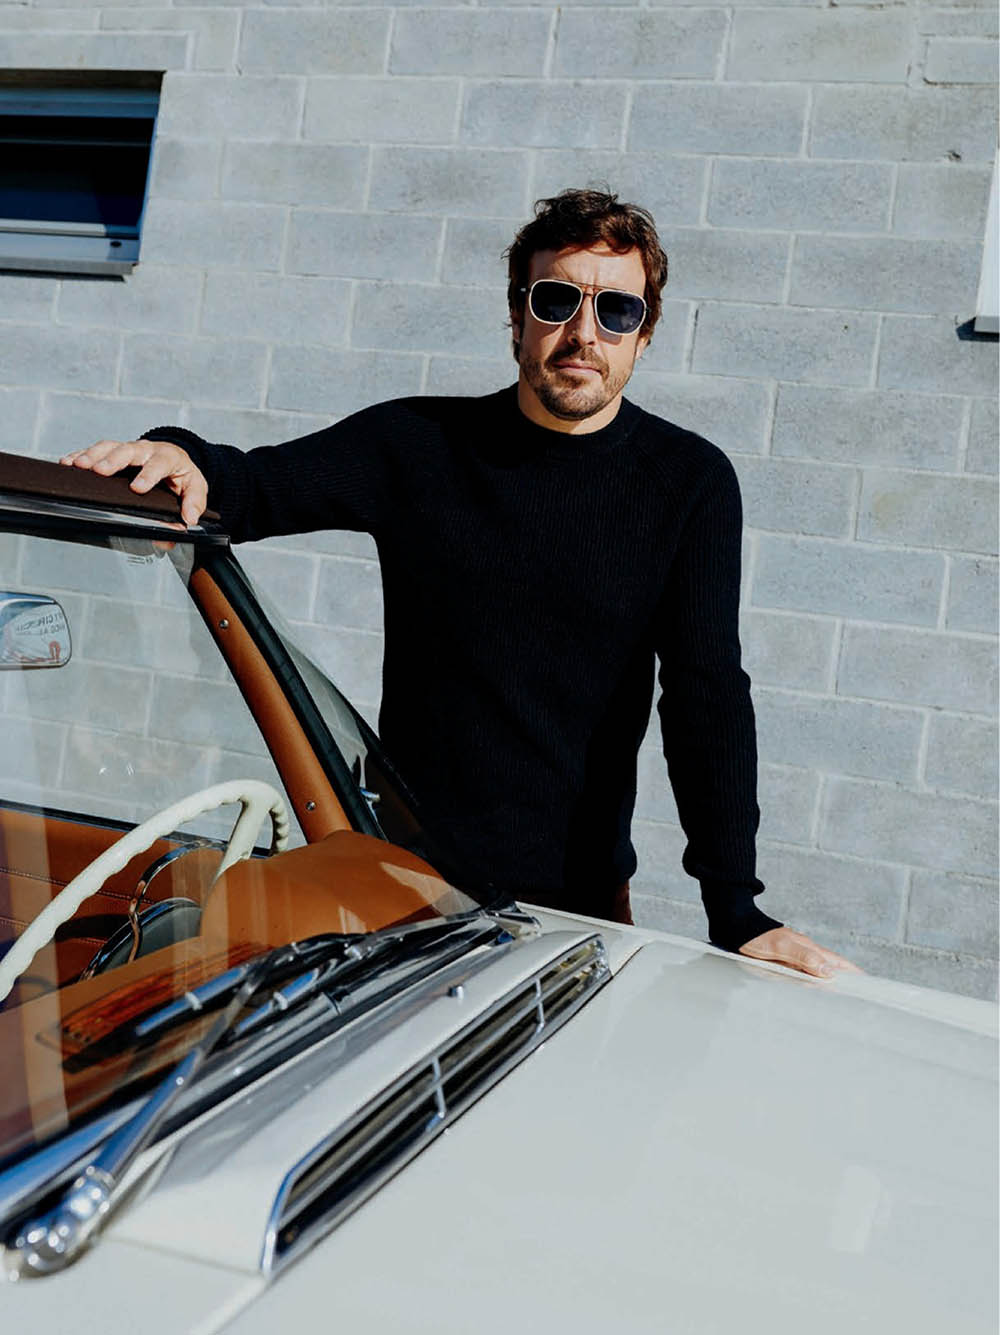 Fernando Alonso covers GQ Spain November 2019 by Adrià Cañameras